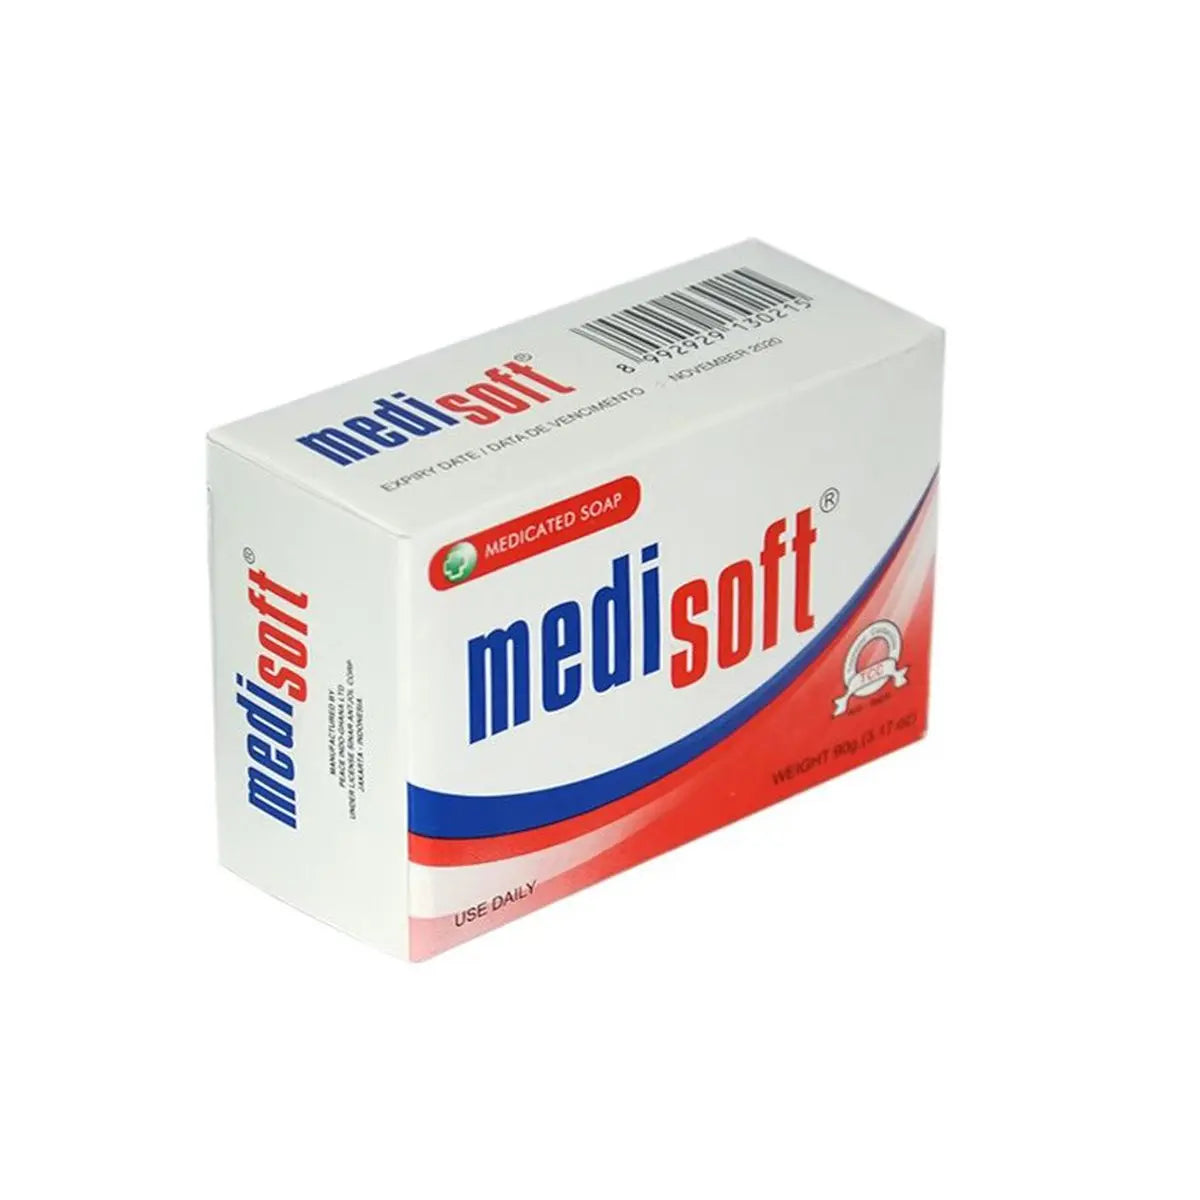 medisoft-soap